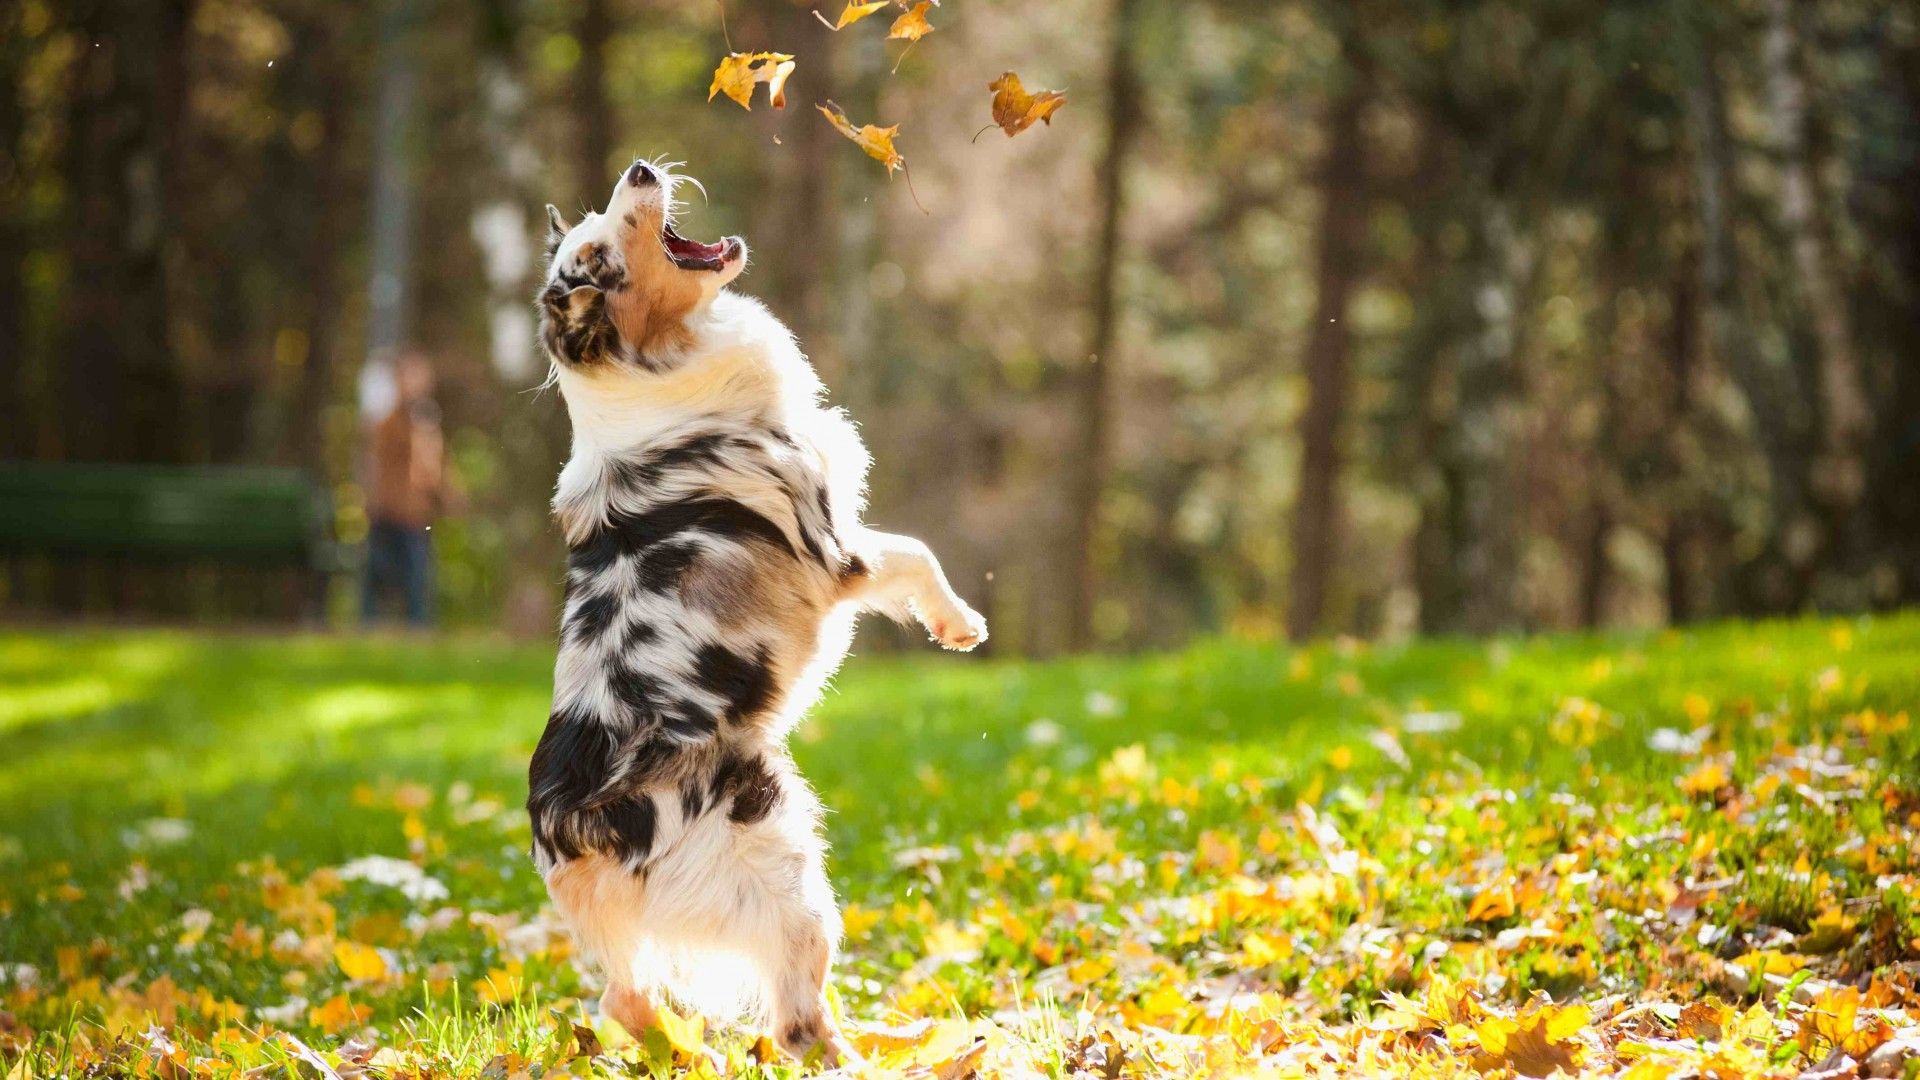 Dog, Puppy, Jumping, Leaves, Autumn, Pet, Green Grass